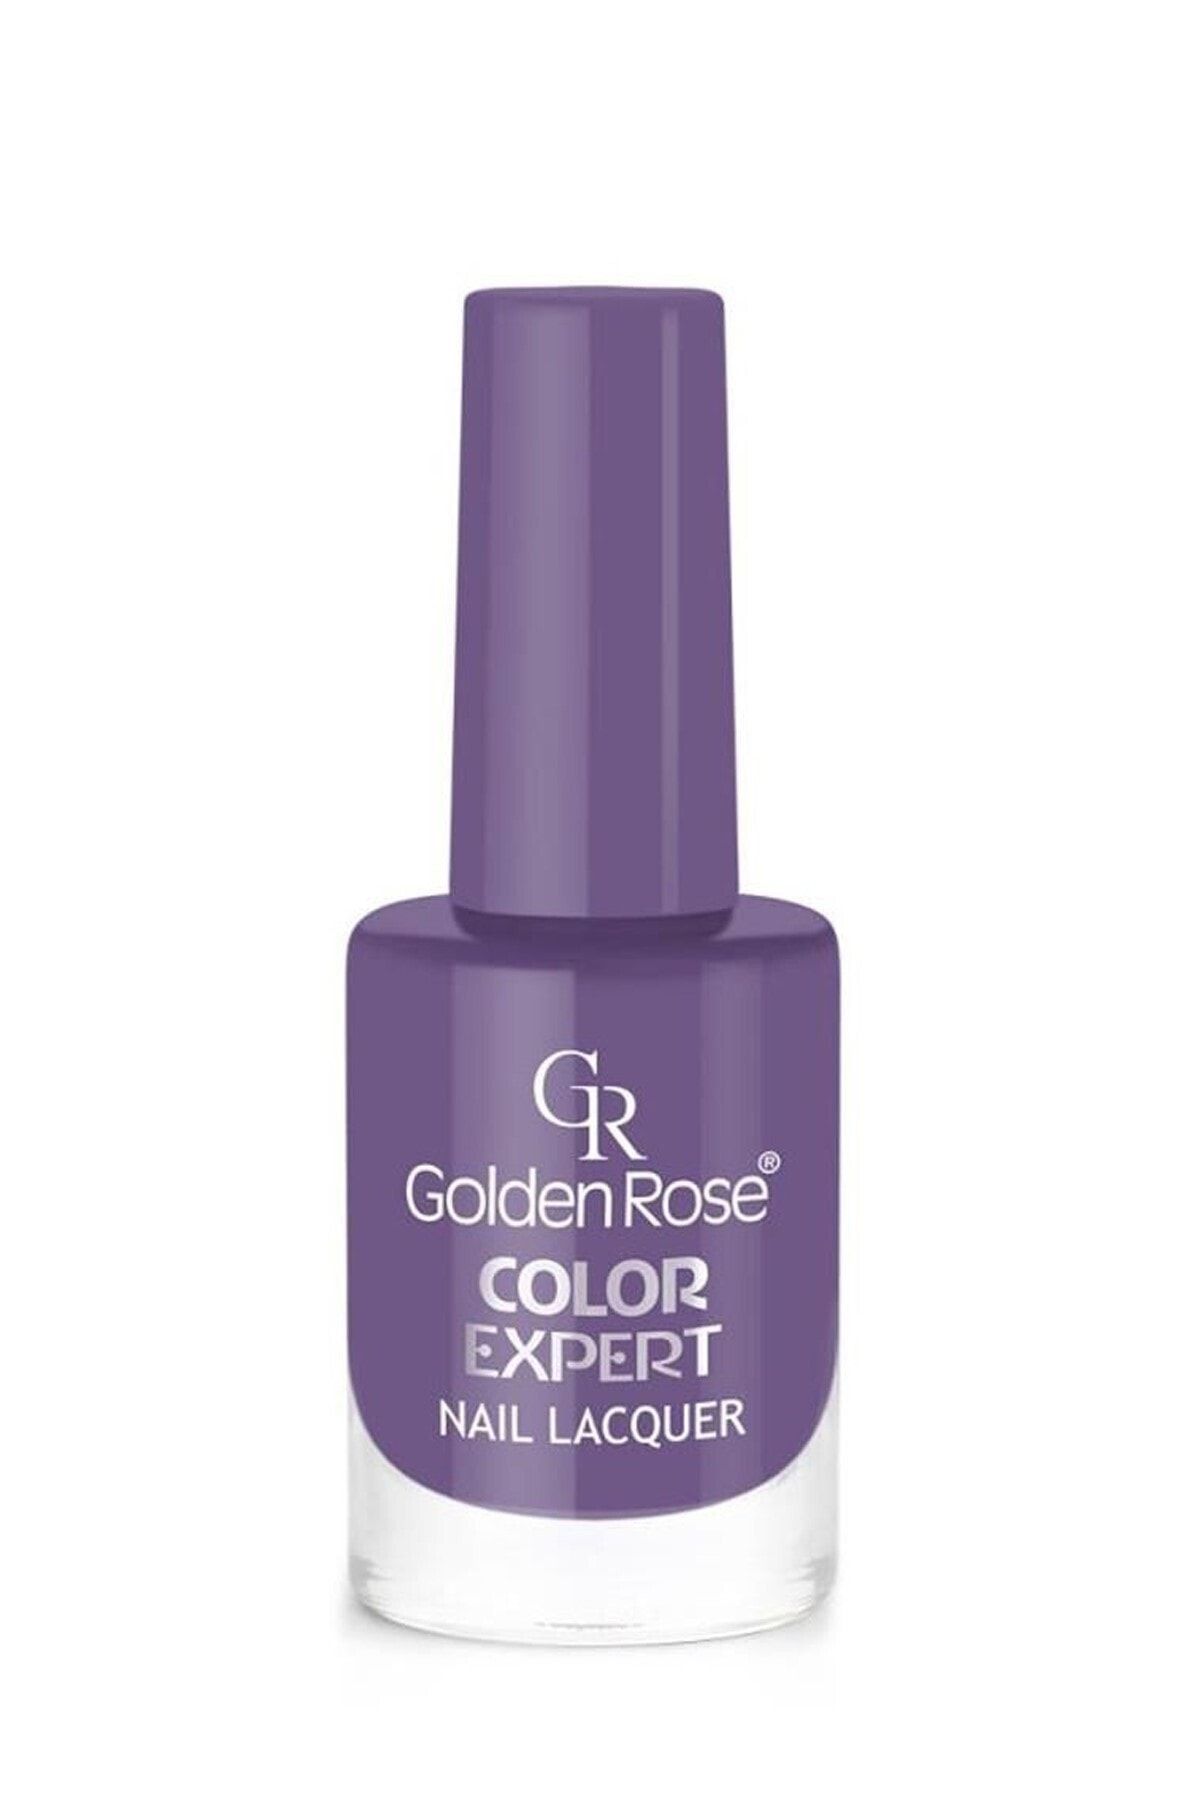 Golden Rose Oje - Color Expert Nail Lacquer No: 87 8691190703875